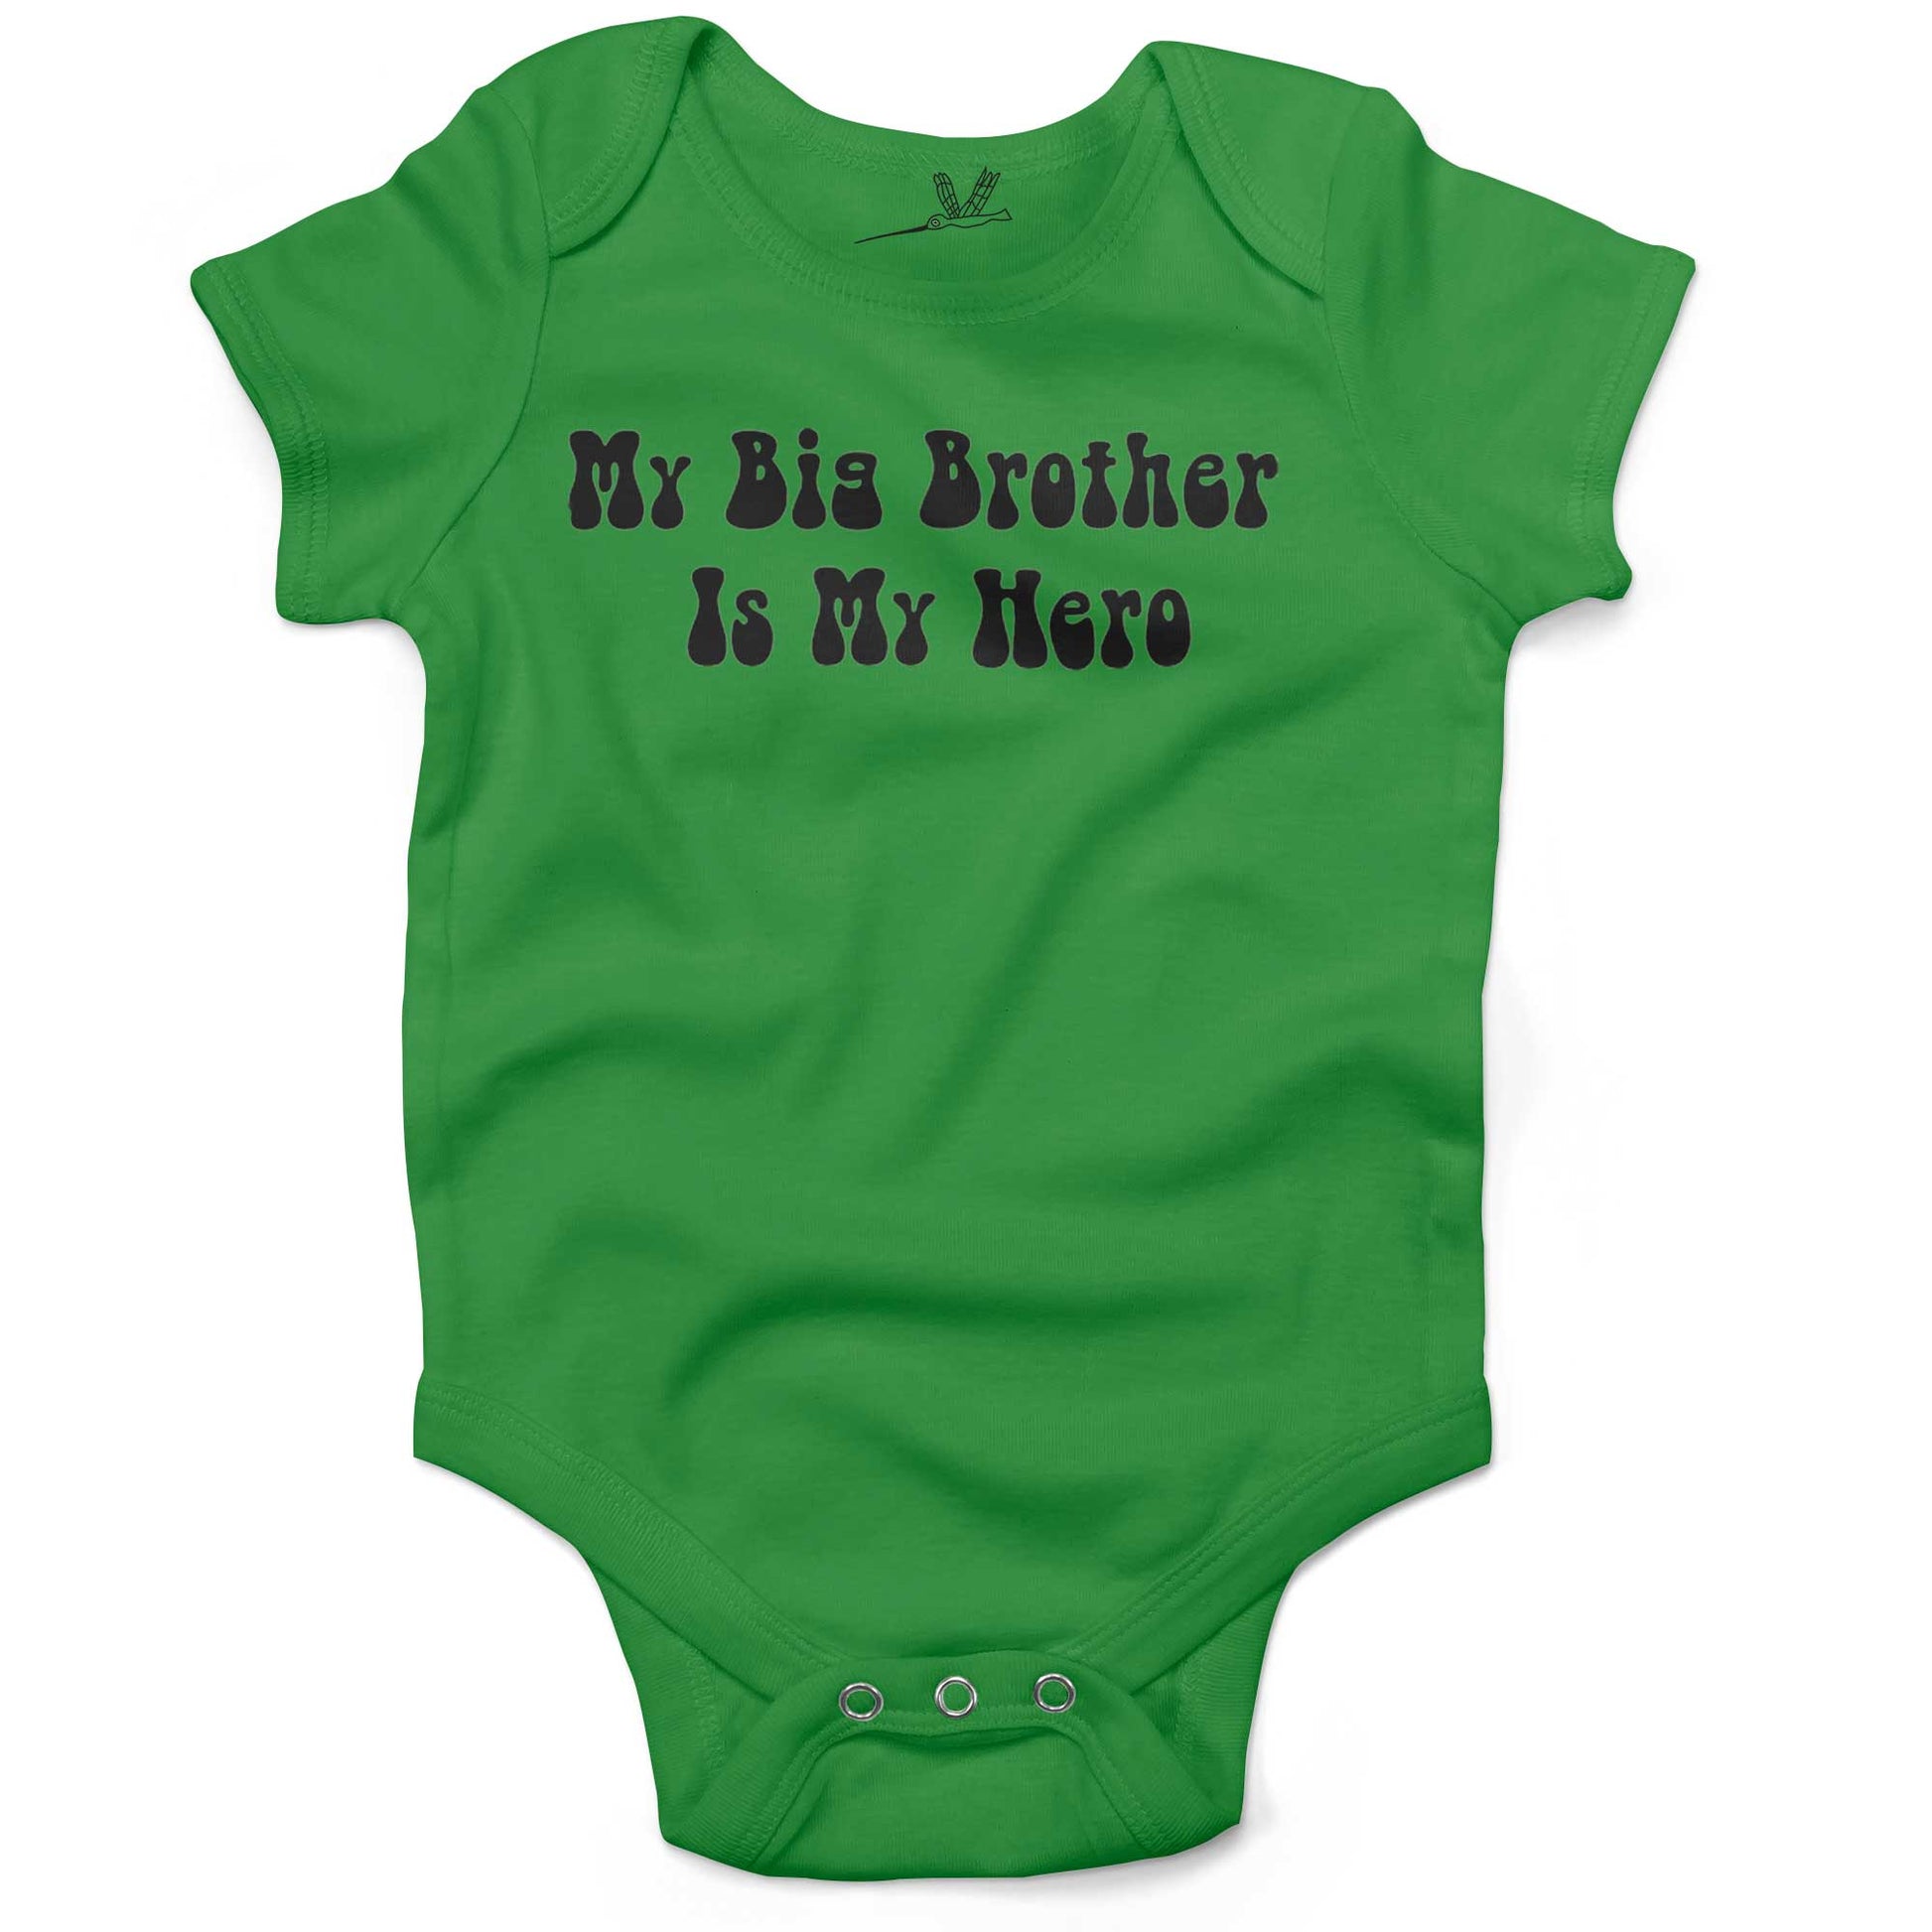 My Big Brother Is My Hero Infant Bodysuit or Raglan Tee-Grass Green-3-6 months